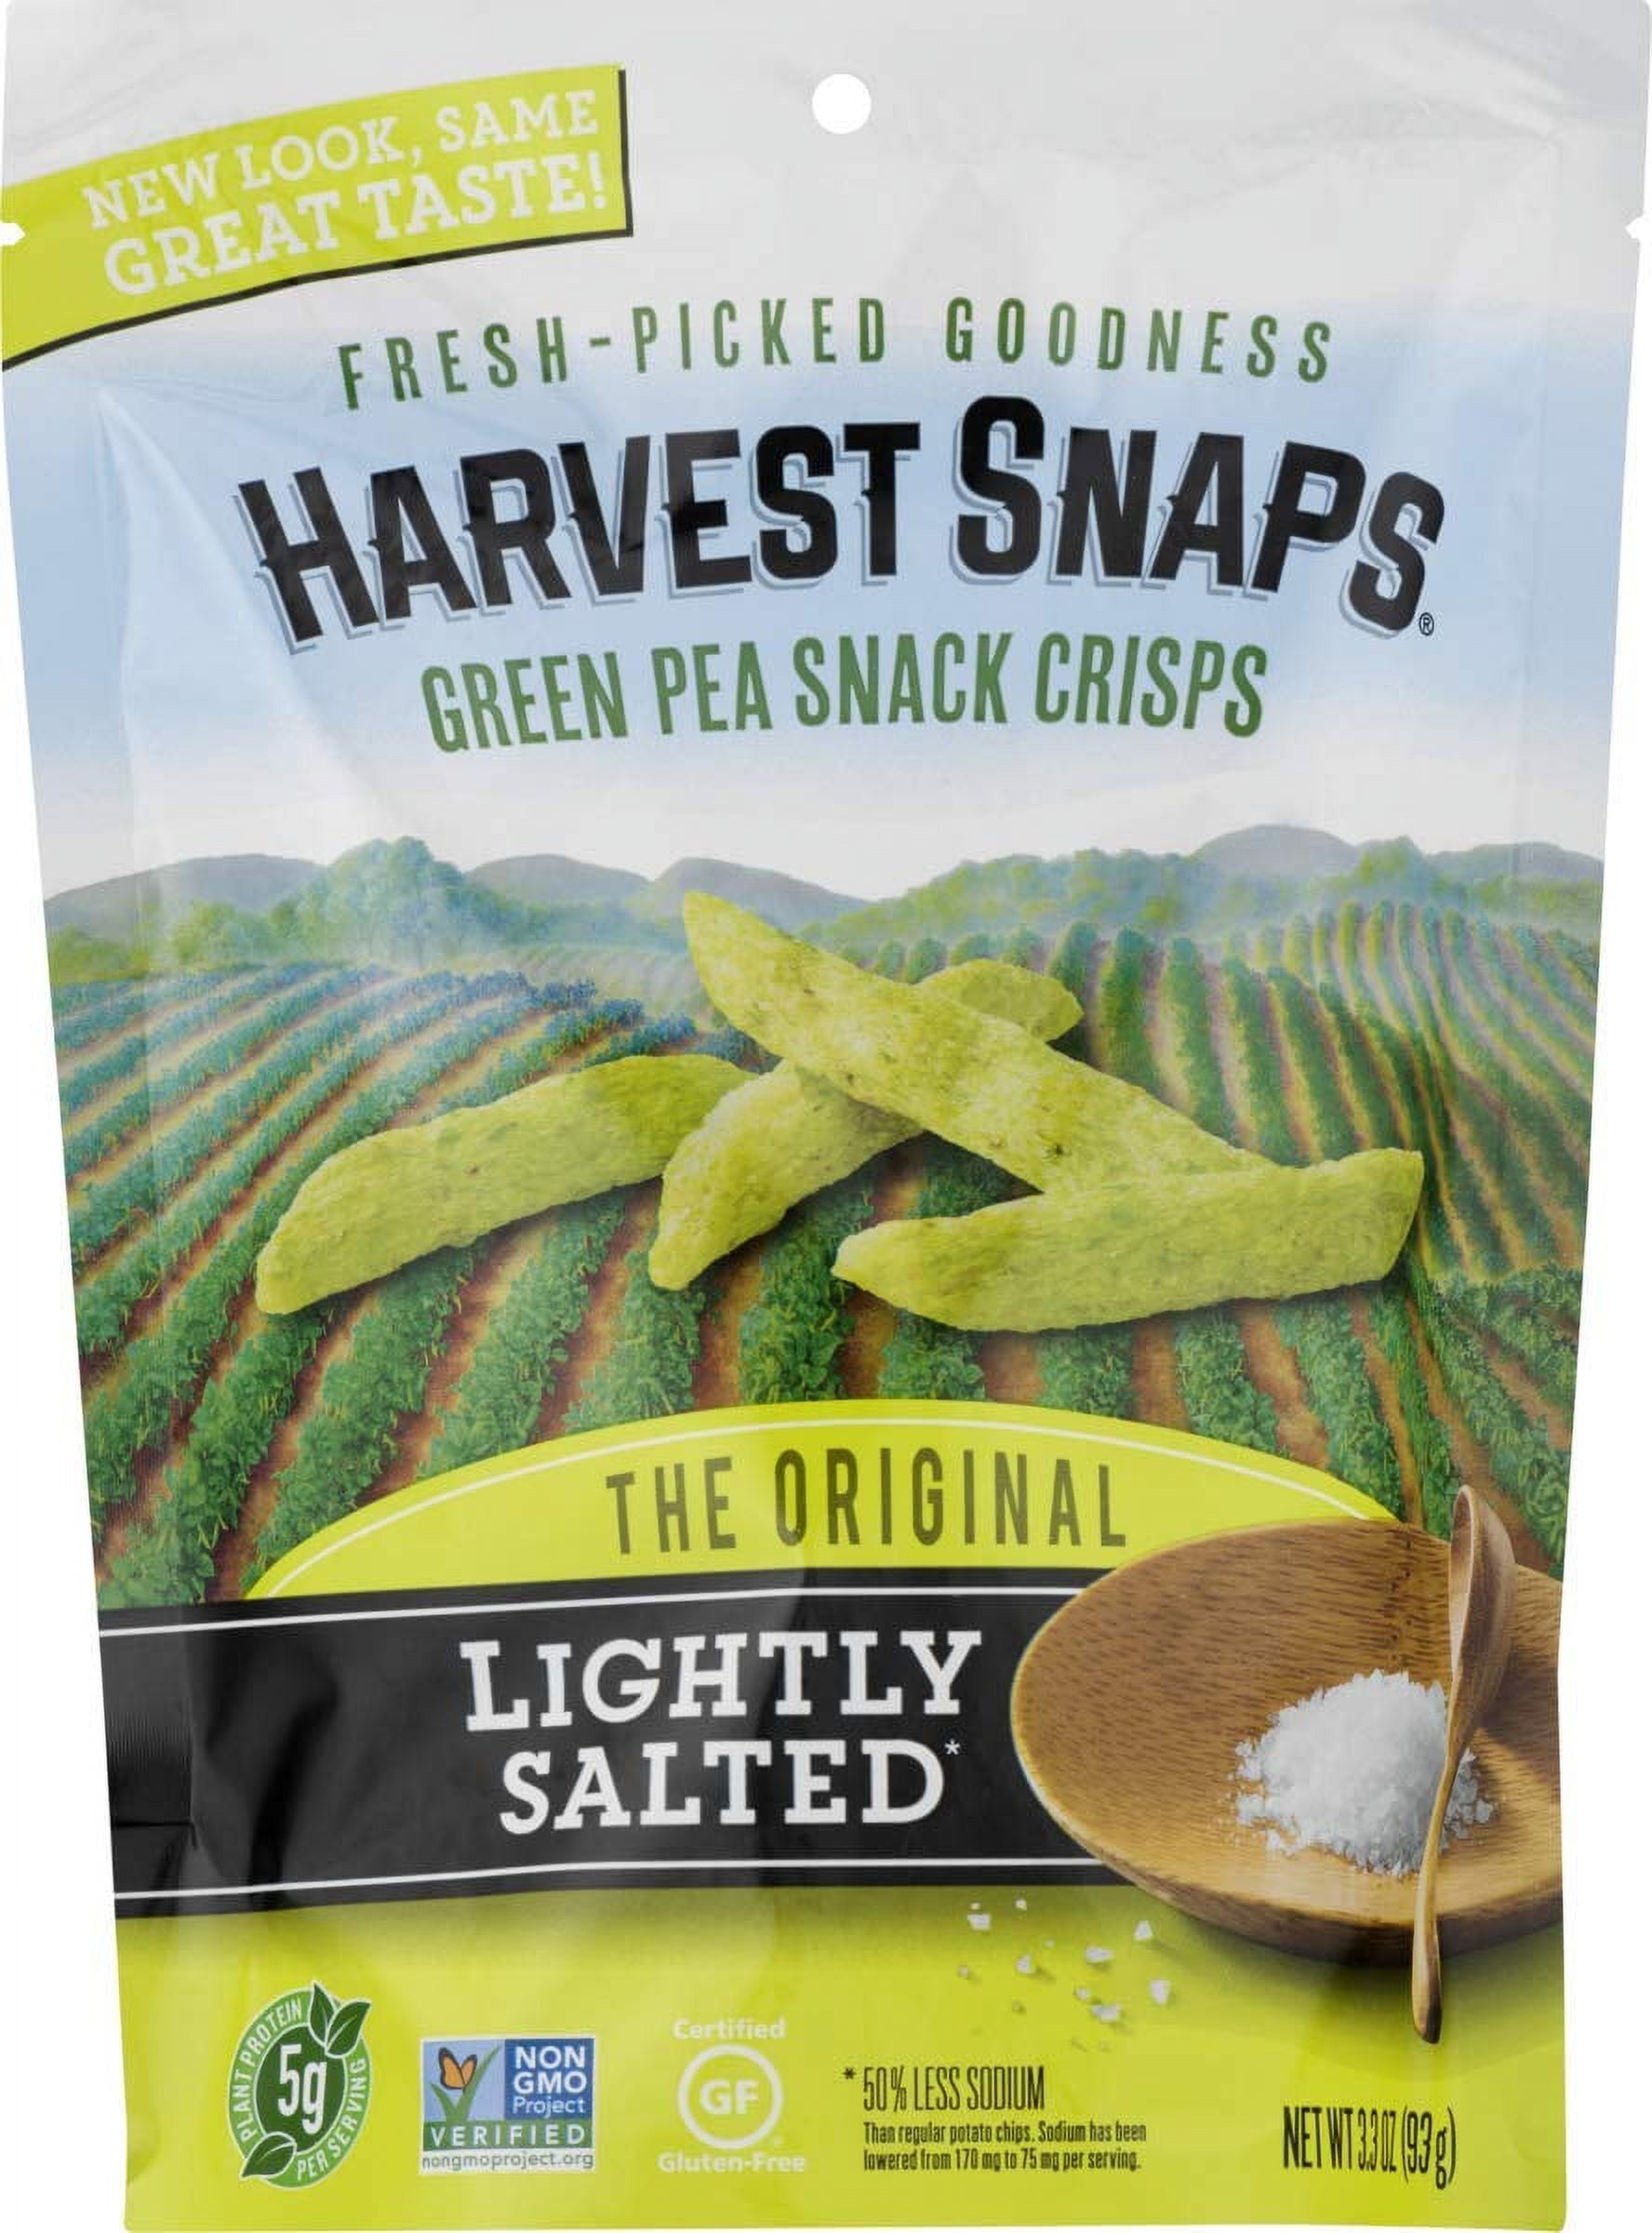 Calbee Gluten Free Harvest Snaps Snapea Crisps Black Pepper -- 3.3